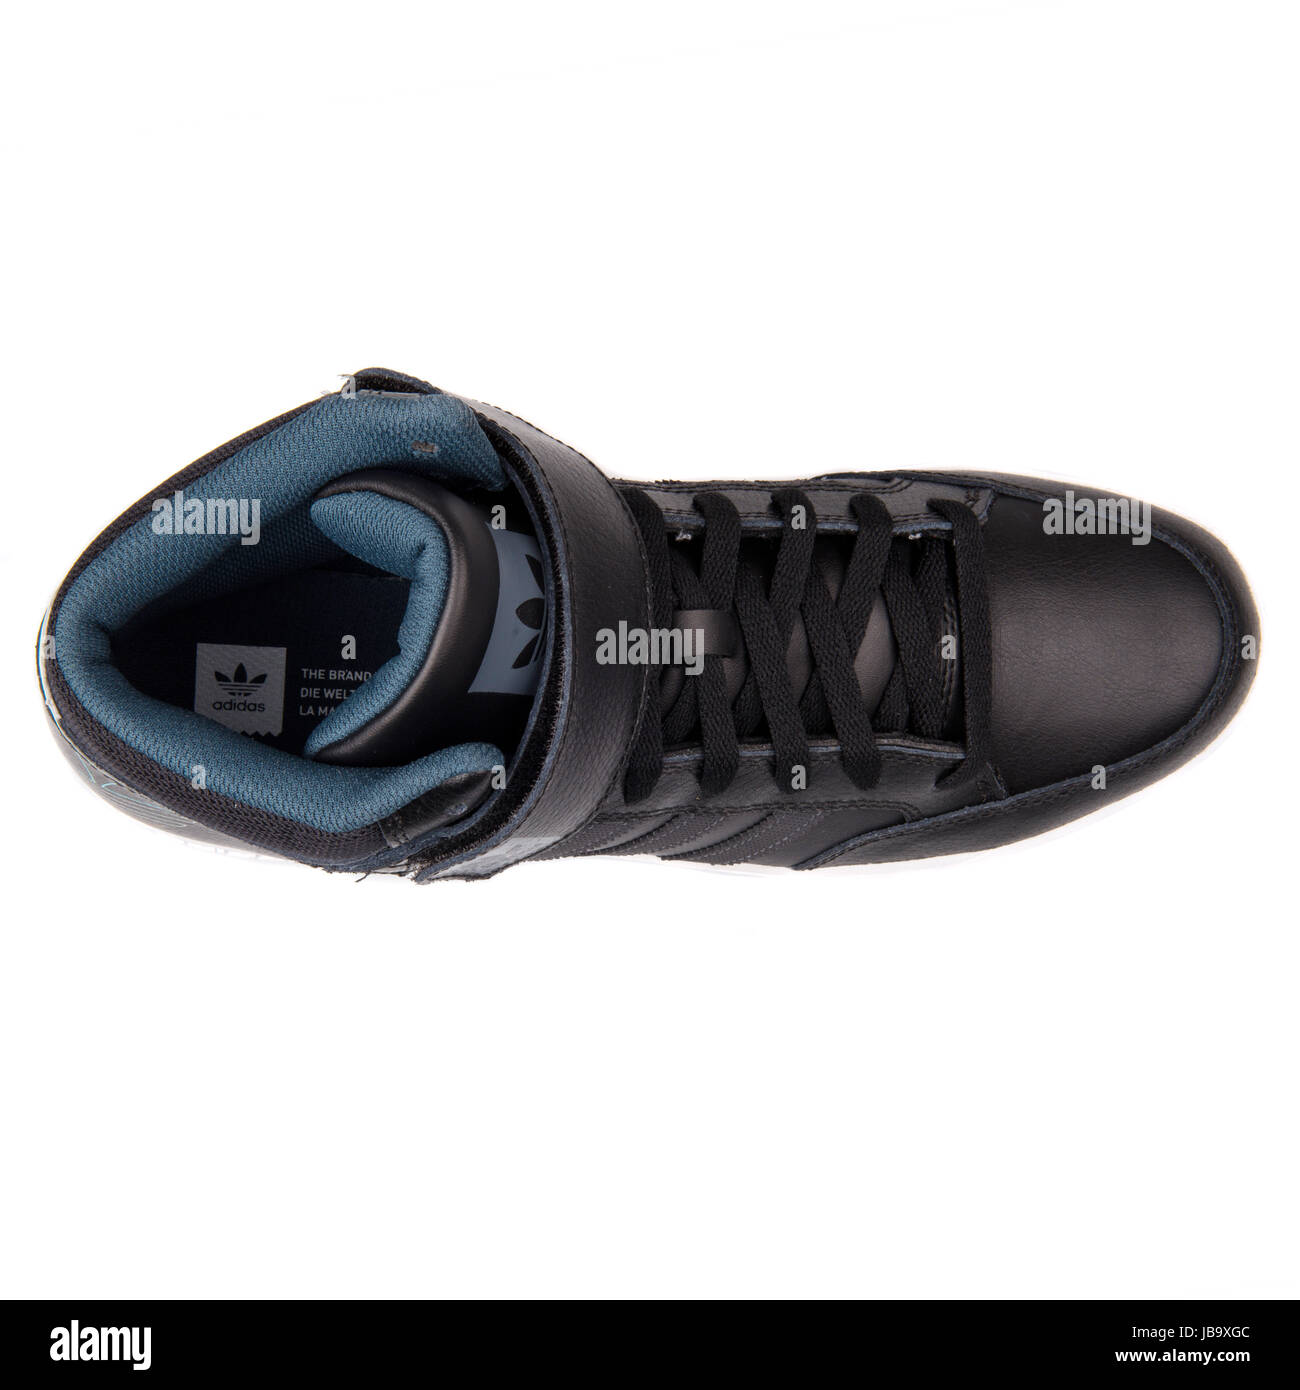 Adidas Varial mid in pelle nero Uomo Scarpe da basket - D68664 Foto stock -  Alamy